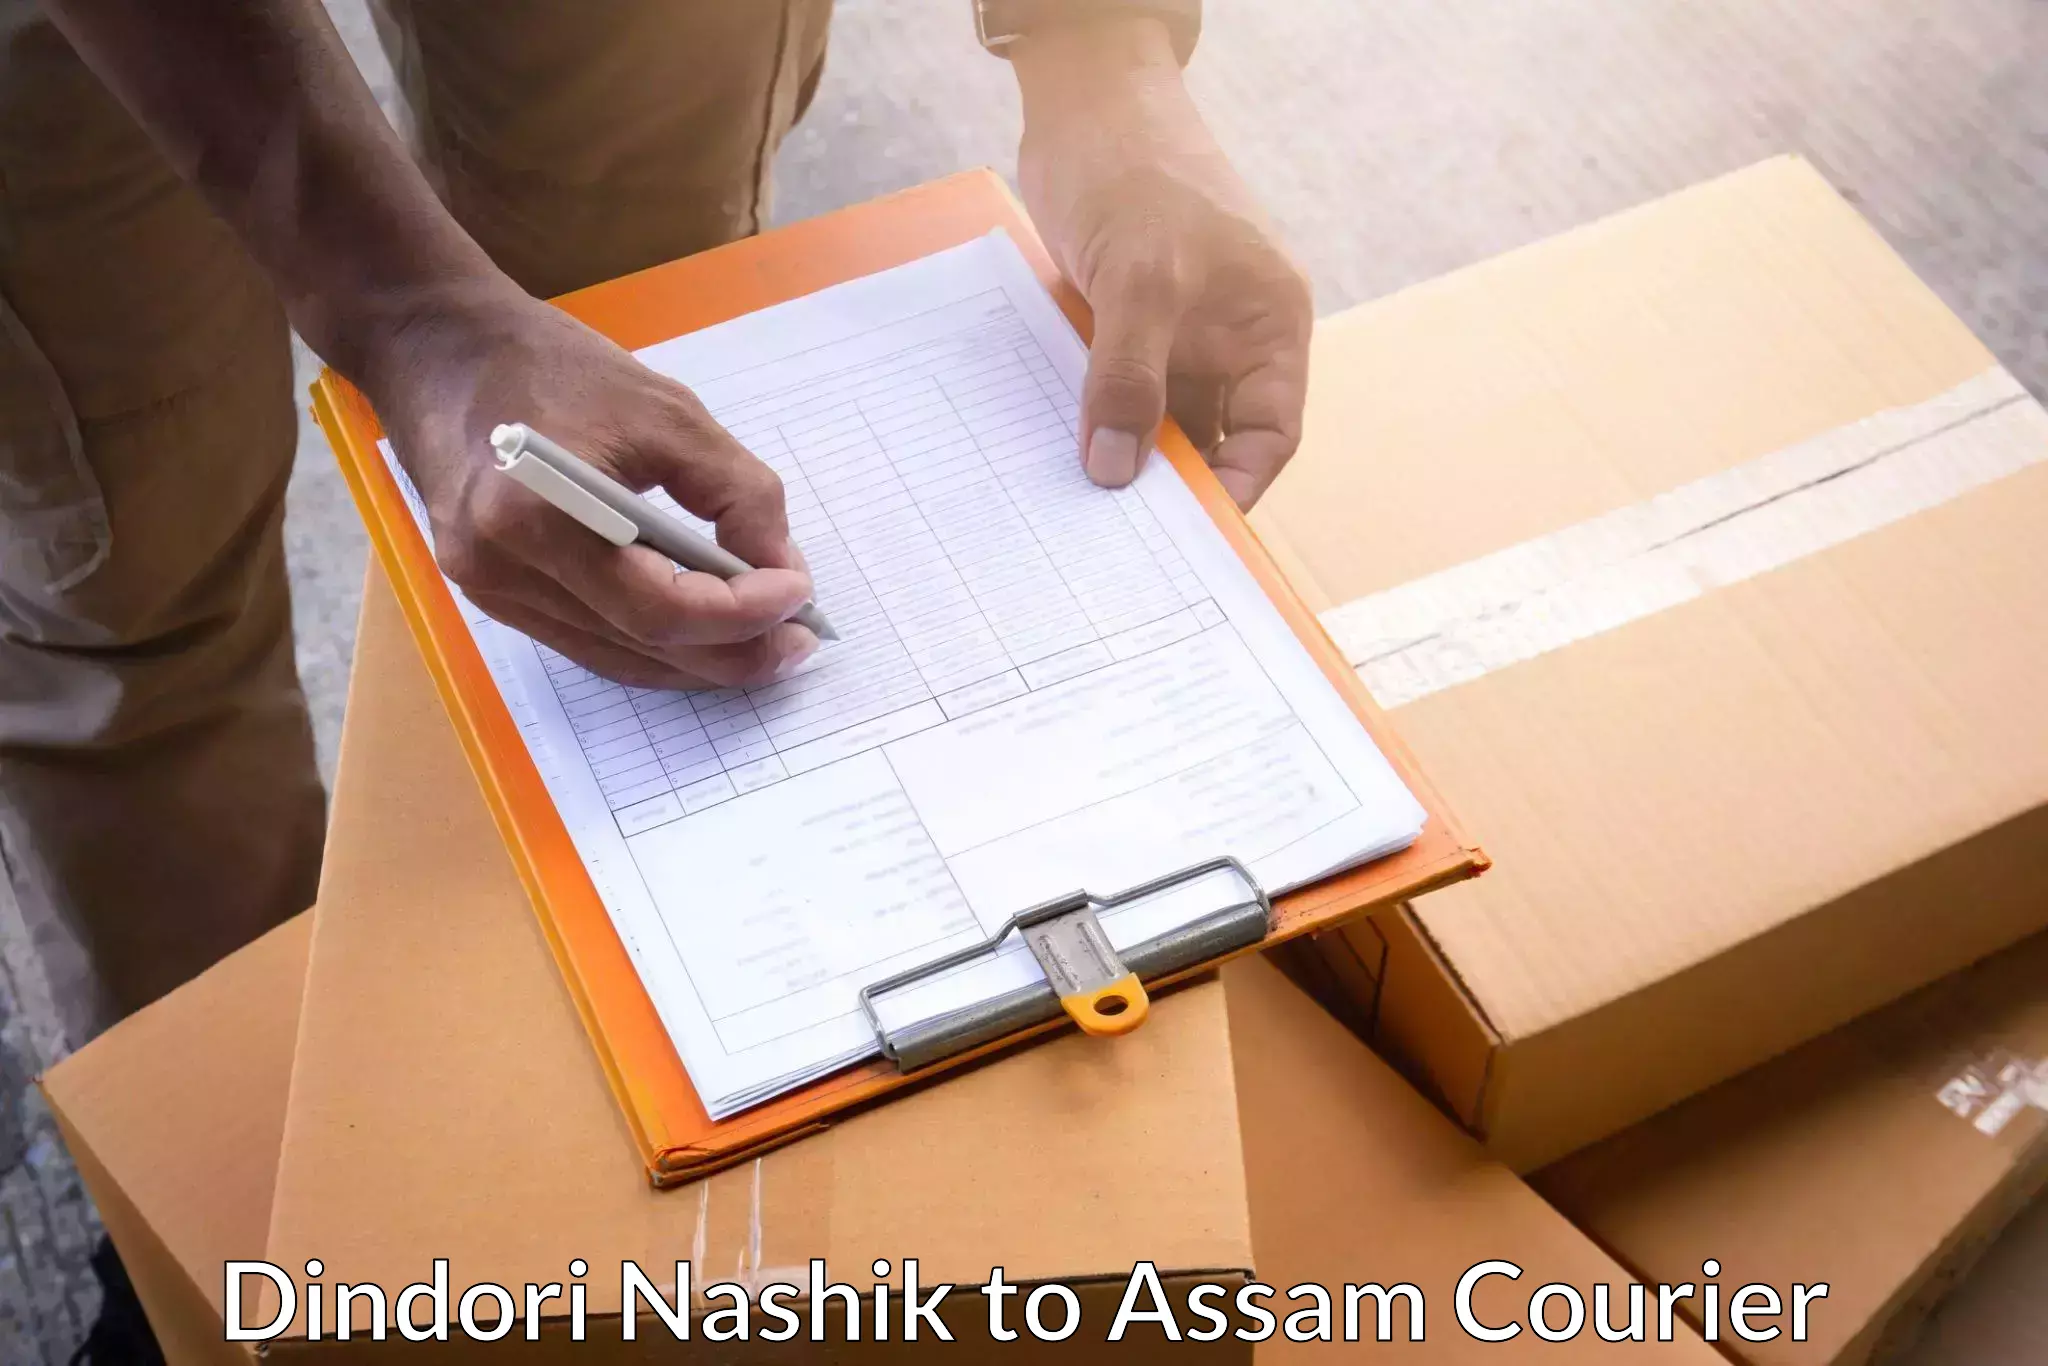 Advanced shipping network Dindori Nashik to Assam